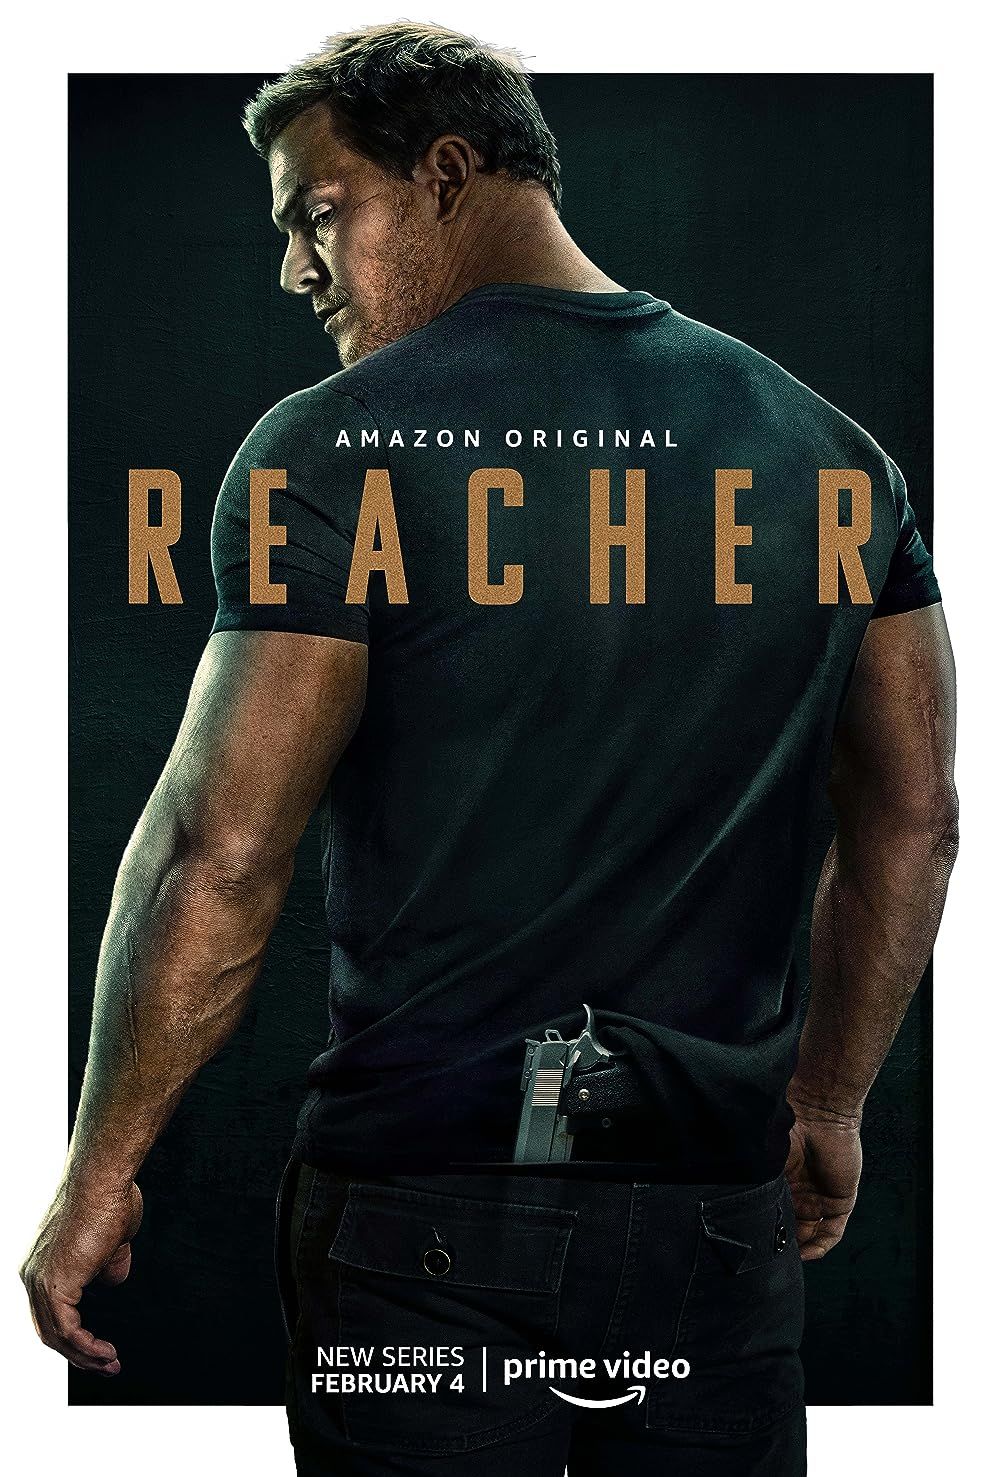 When Can You Watch 'Reacher' Season 2 on Prime Video?